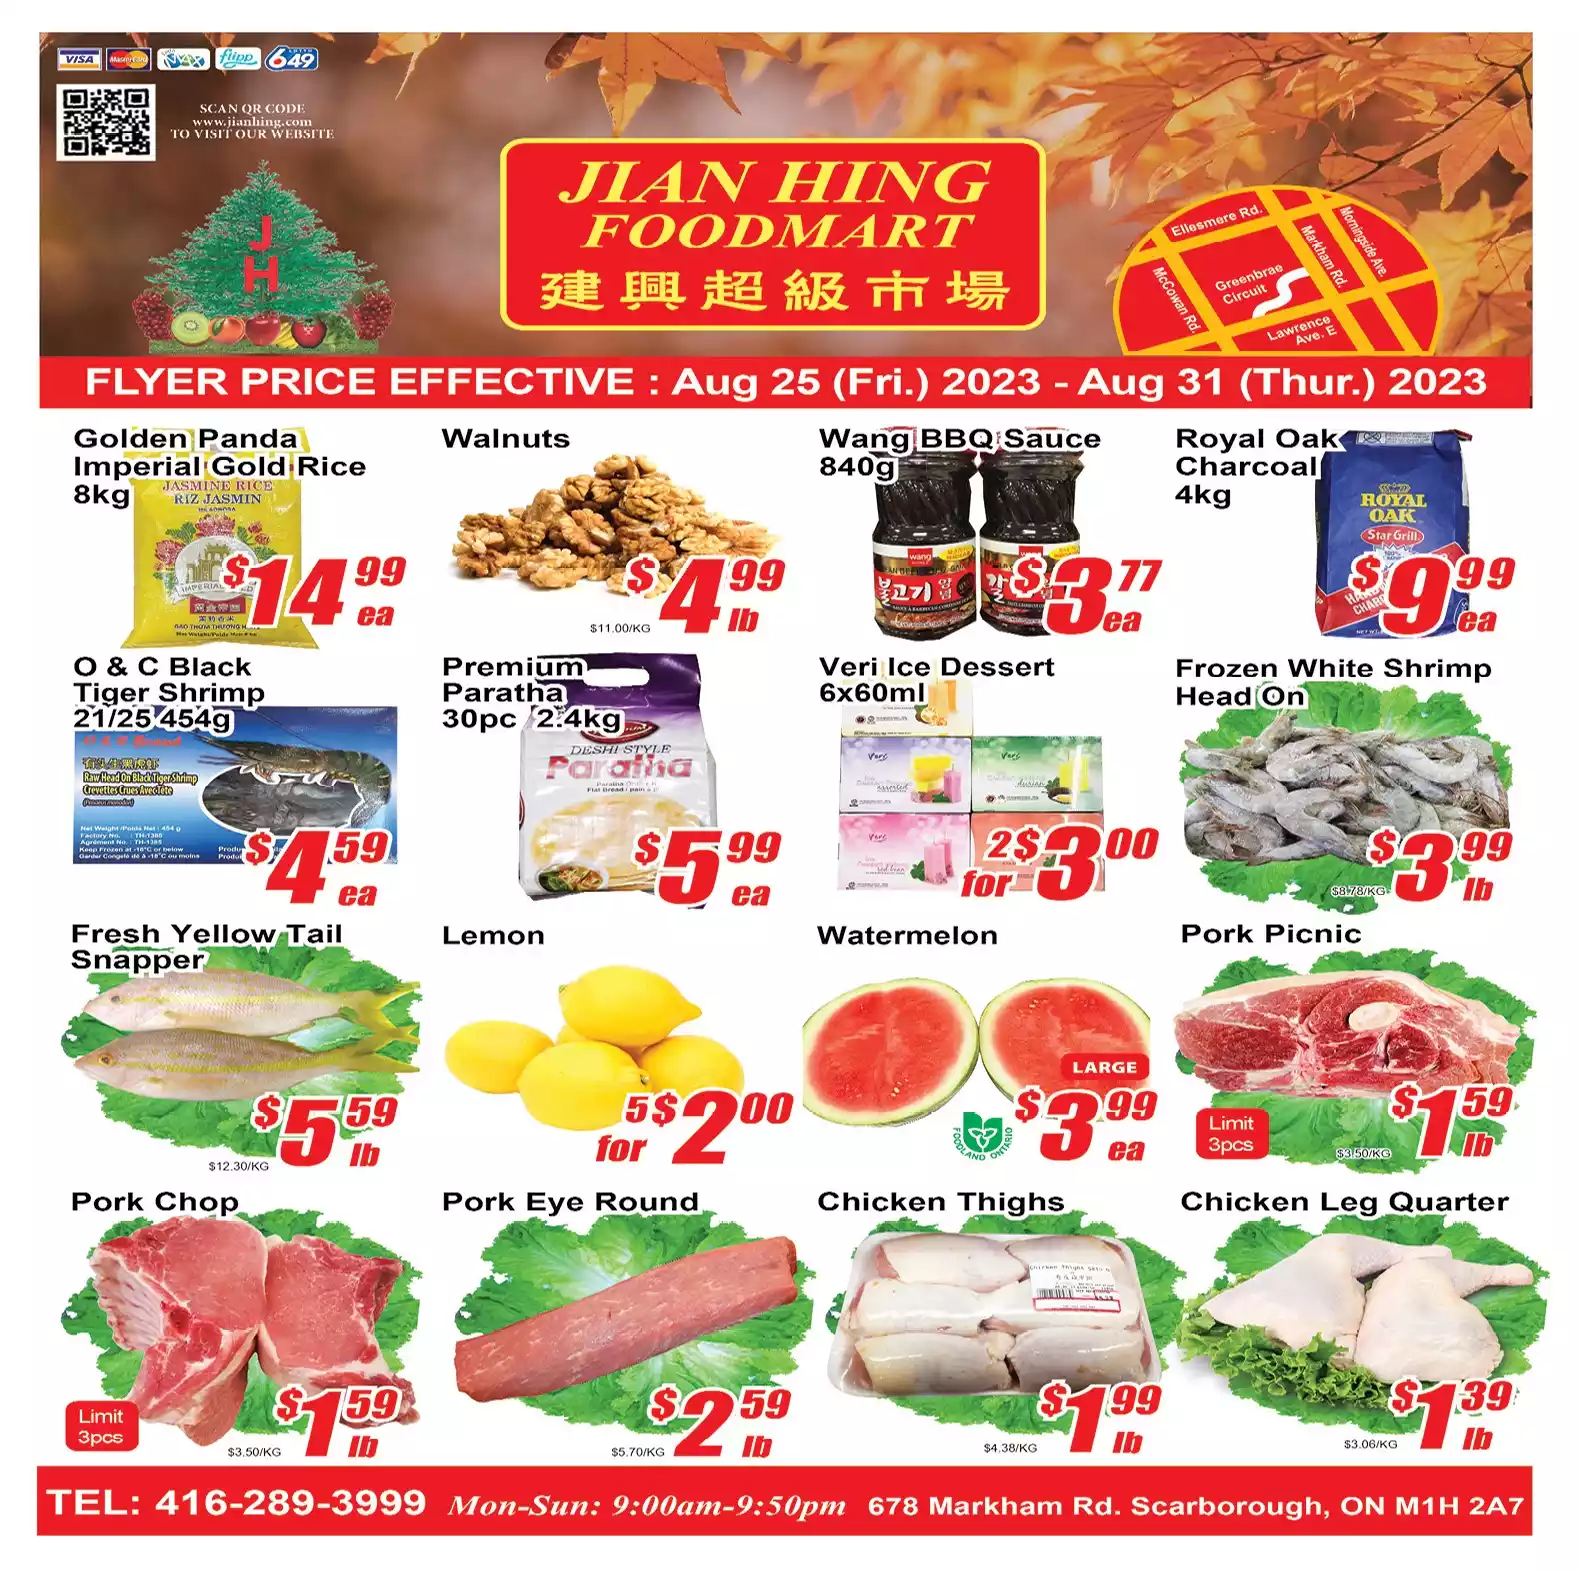 Jian Hing Foodmart Flyer September 29 - October 5, 2023 (Scarborough) 1